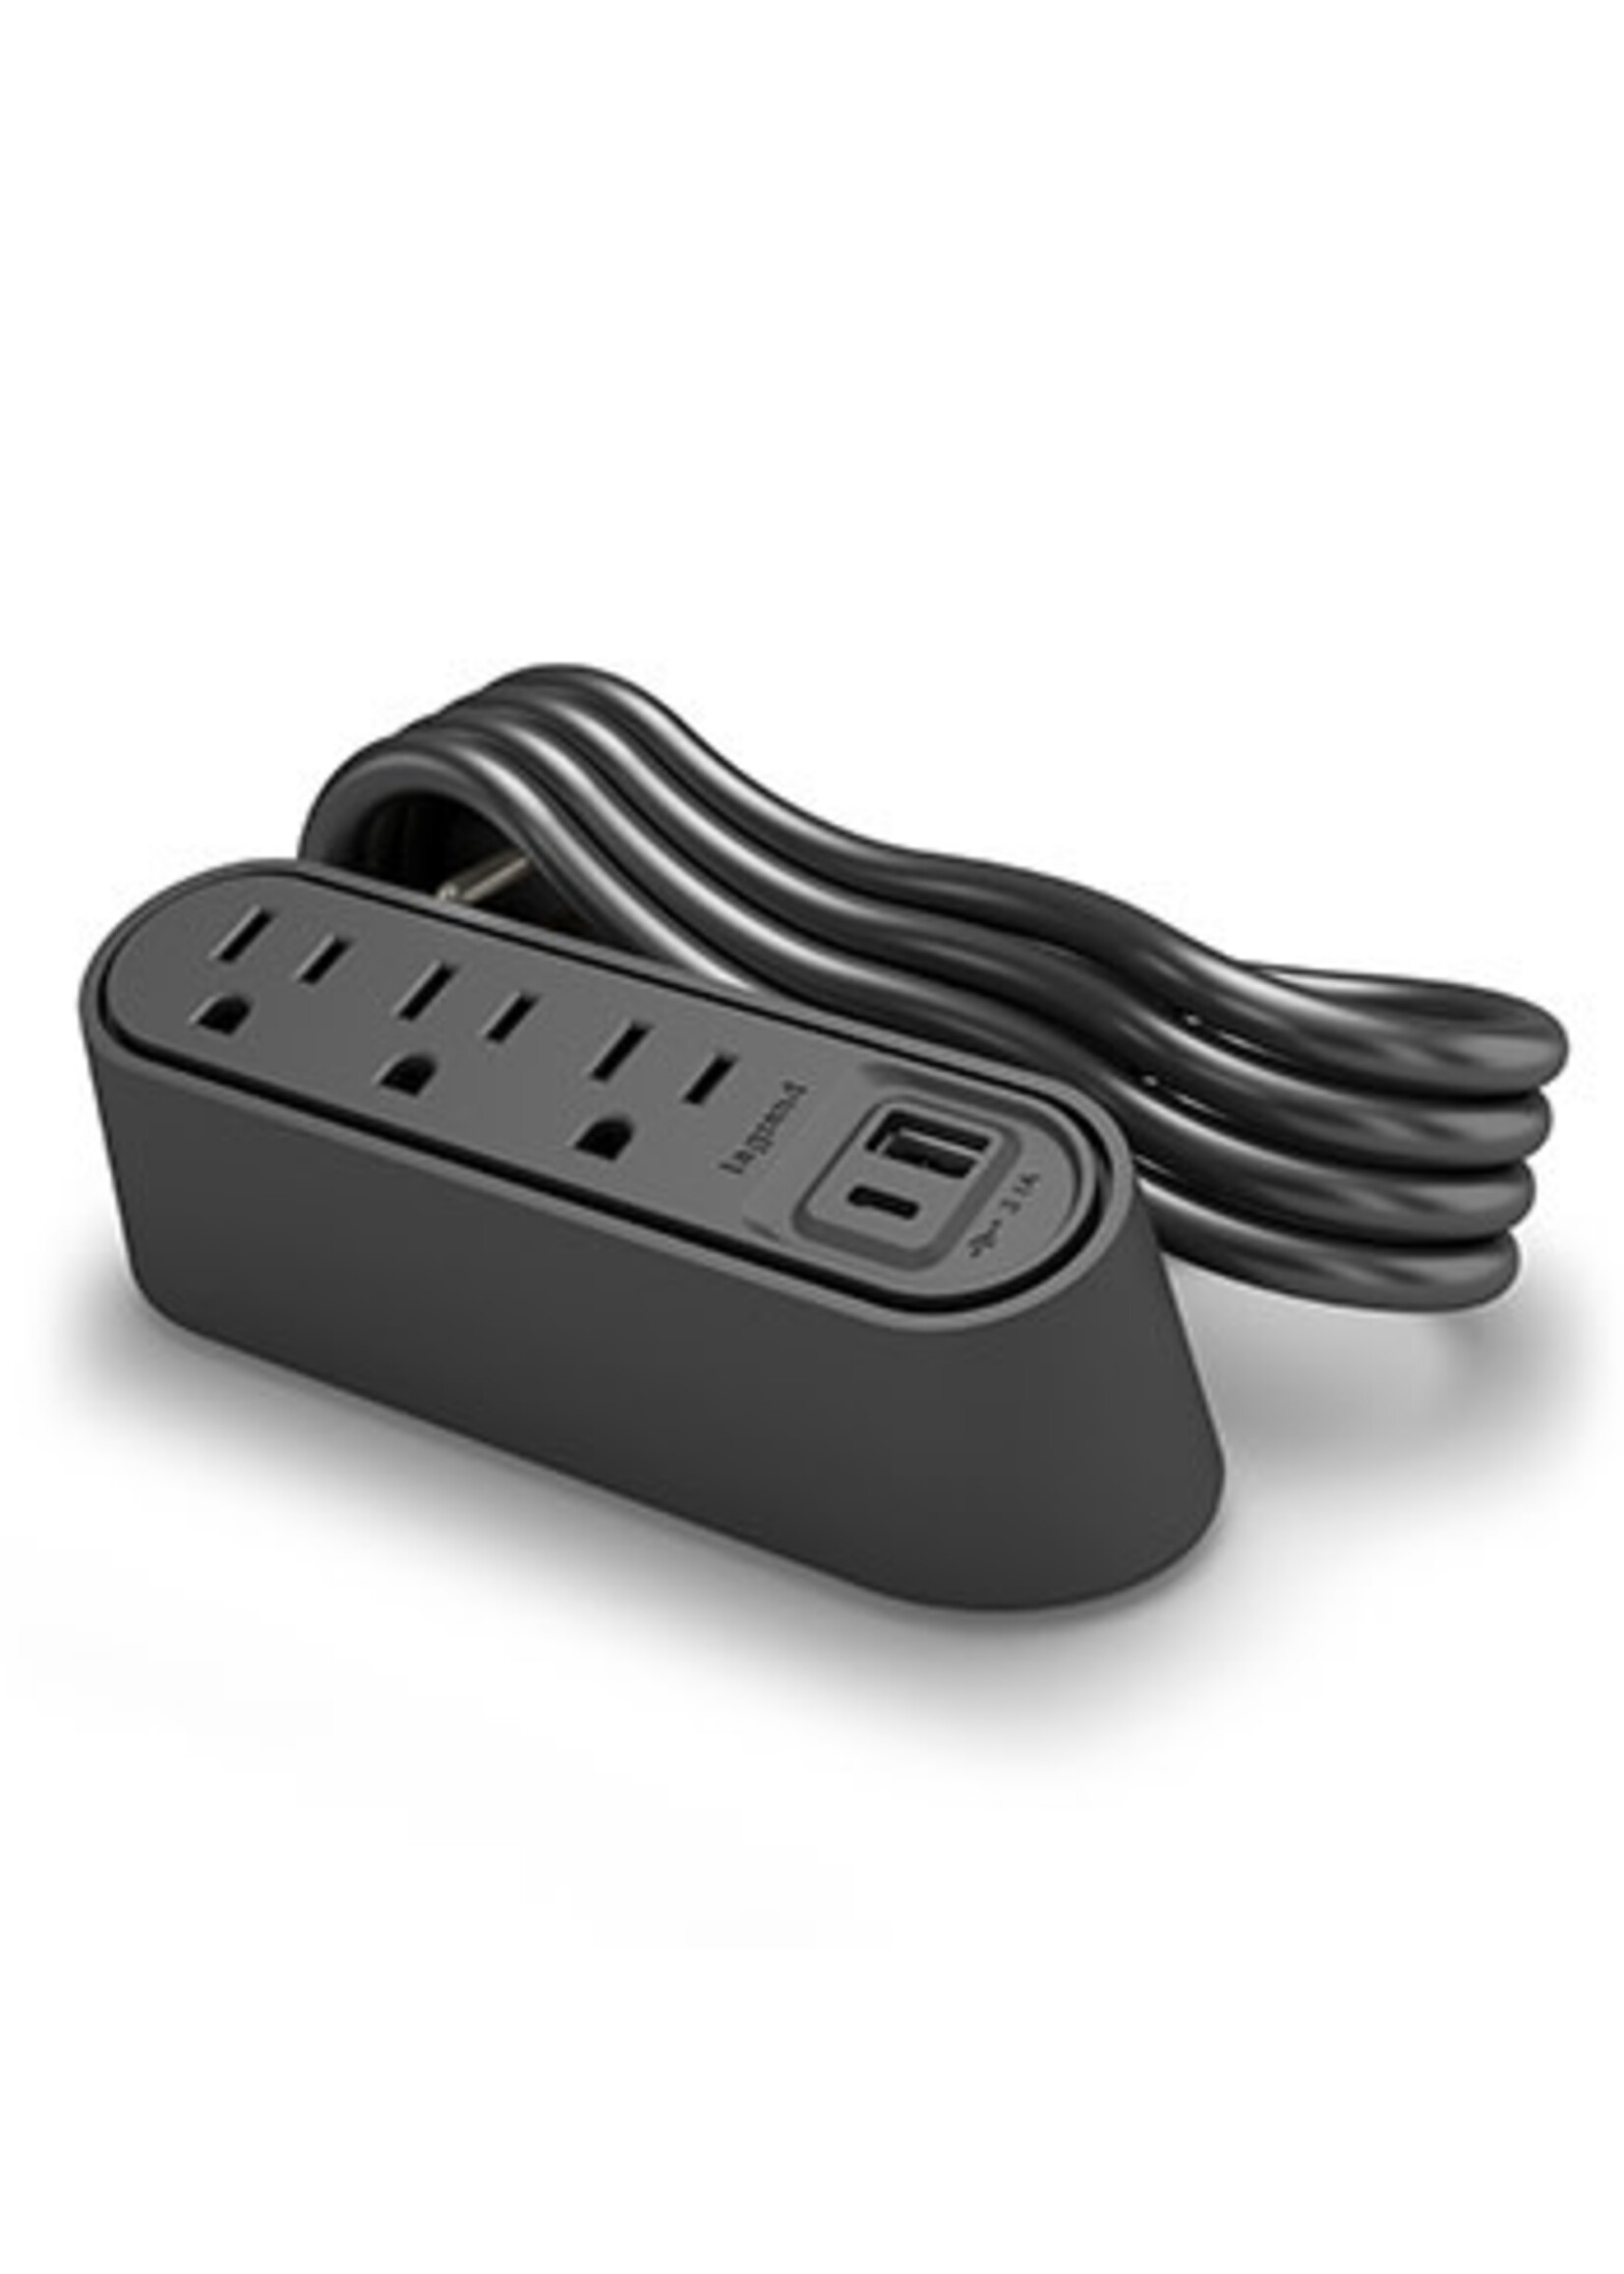 LEGRAND / WIREMOLD WSPC320CBK (Black) Three Outlet, 1 USB-A, 1 USB-C Unit w/Mounting Kit